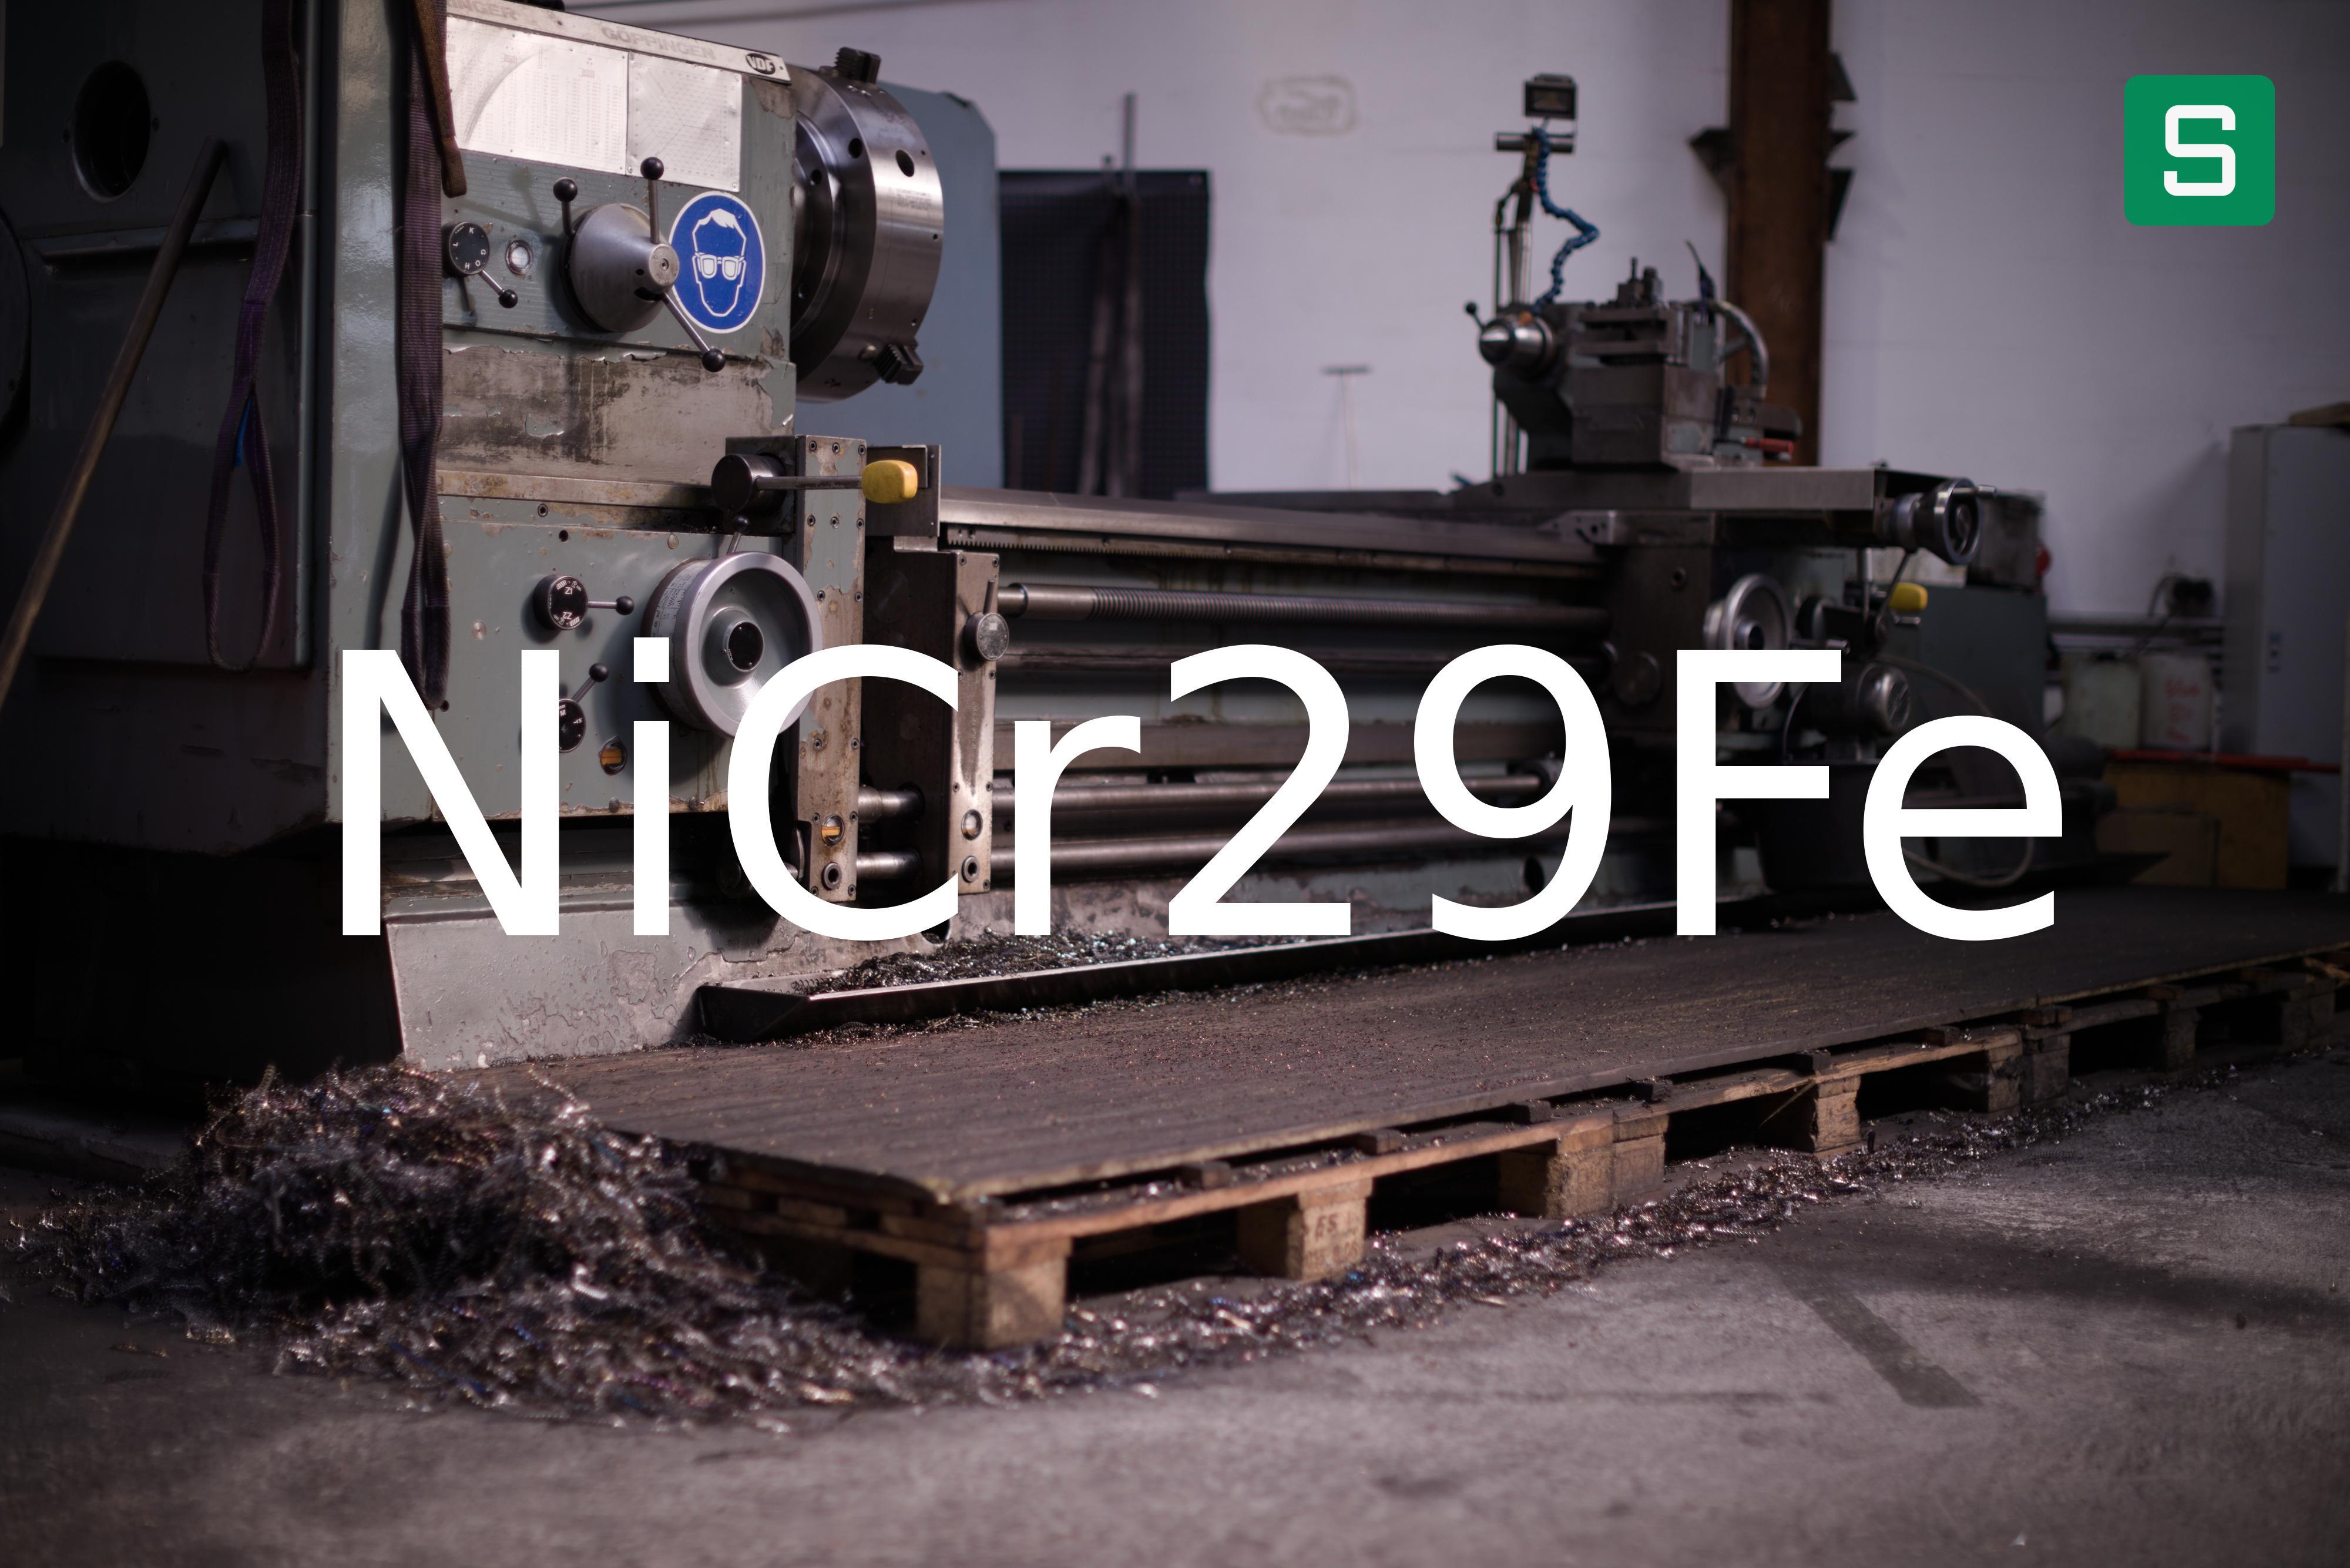 Steel Material: NiCr29Fe